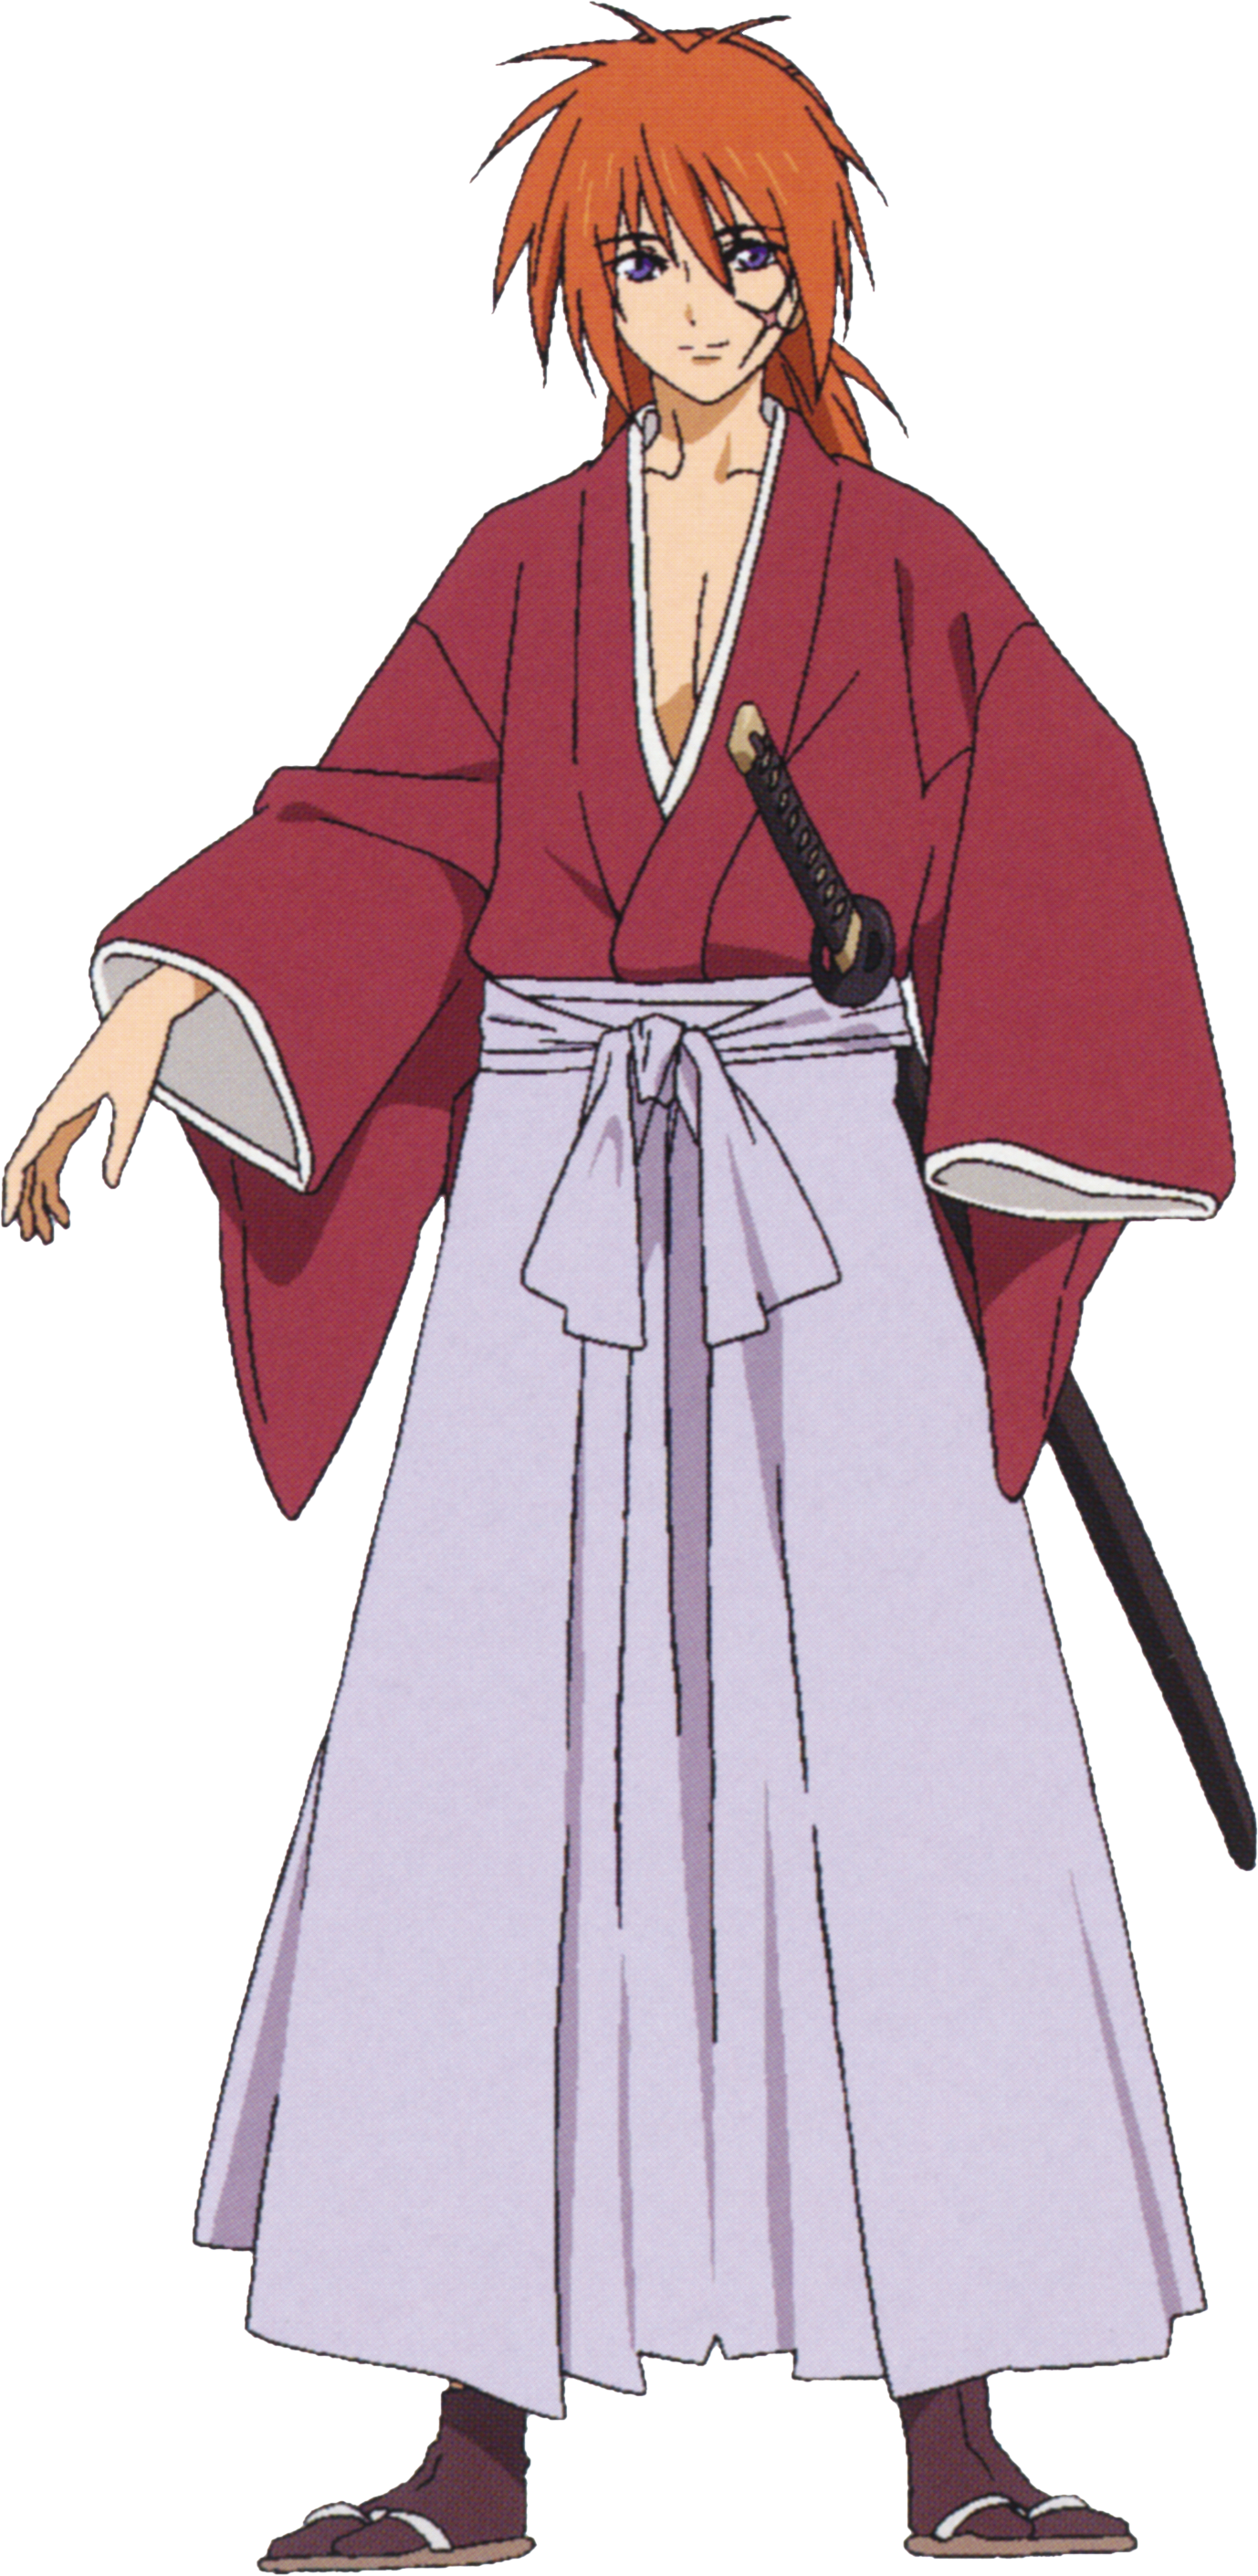 Himura Kenshin - Wikipedia